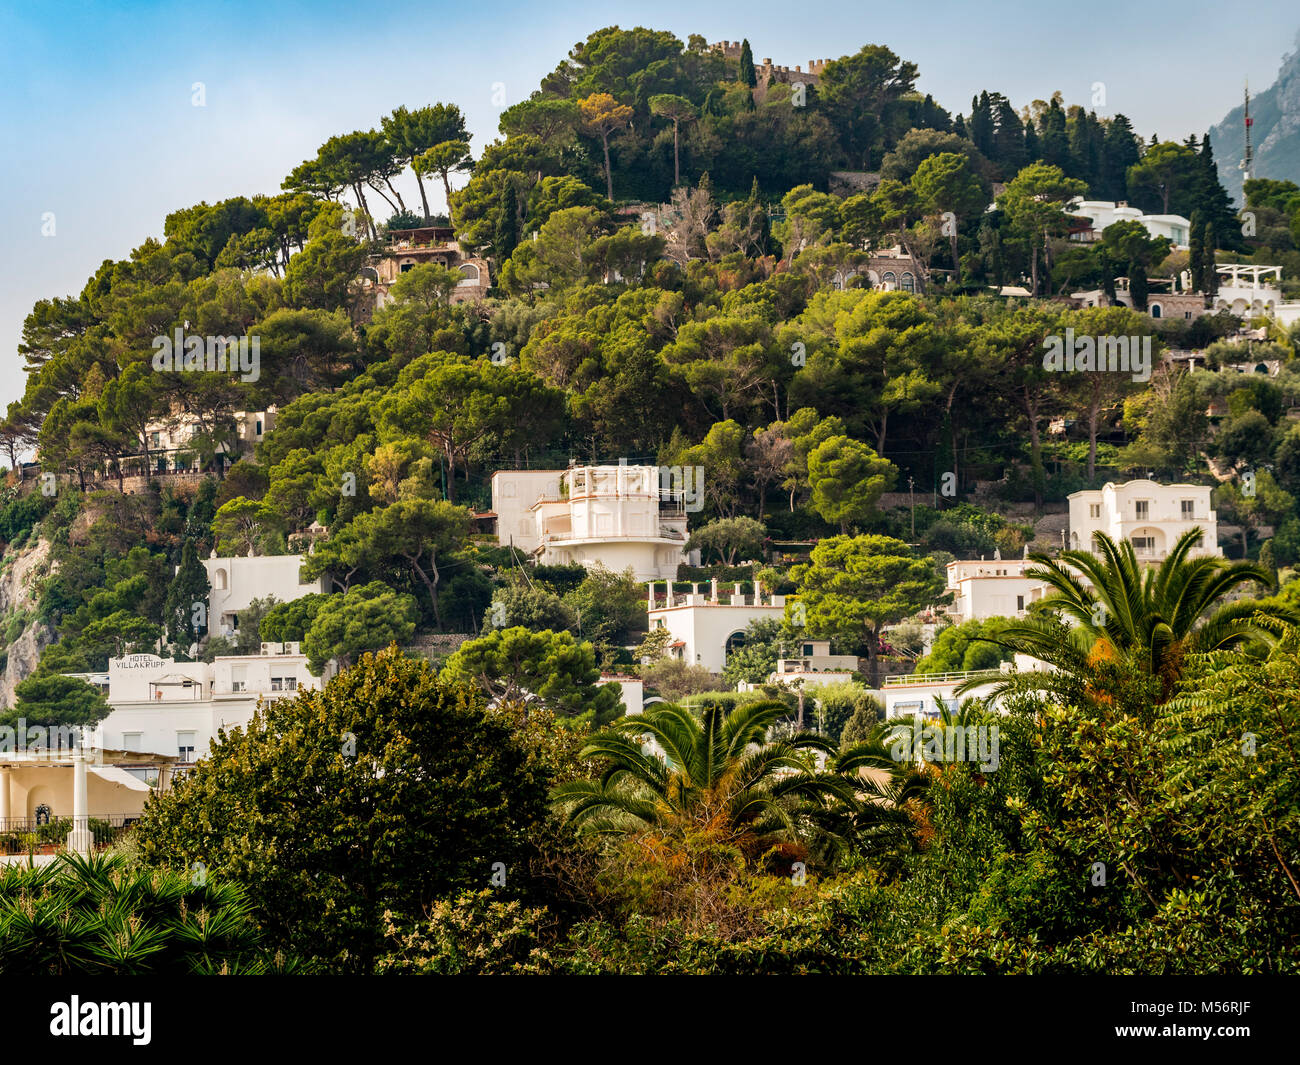 Hillside houses and villas, Capri, Italy. Stock Photo